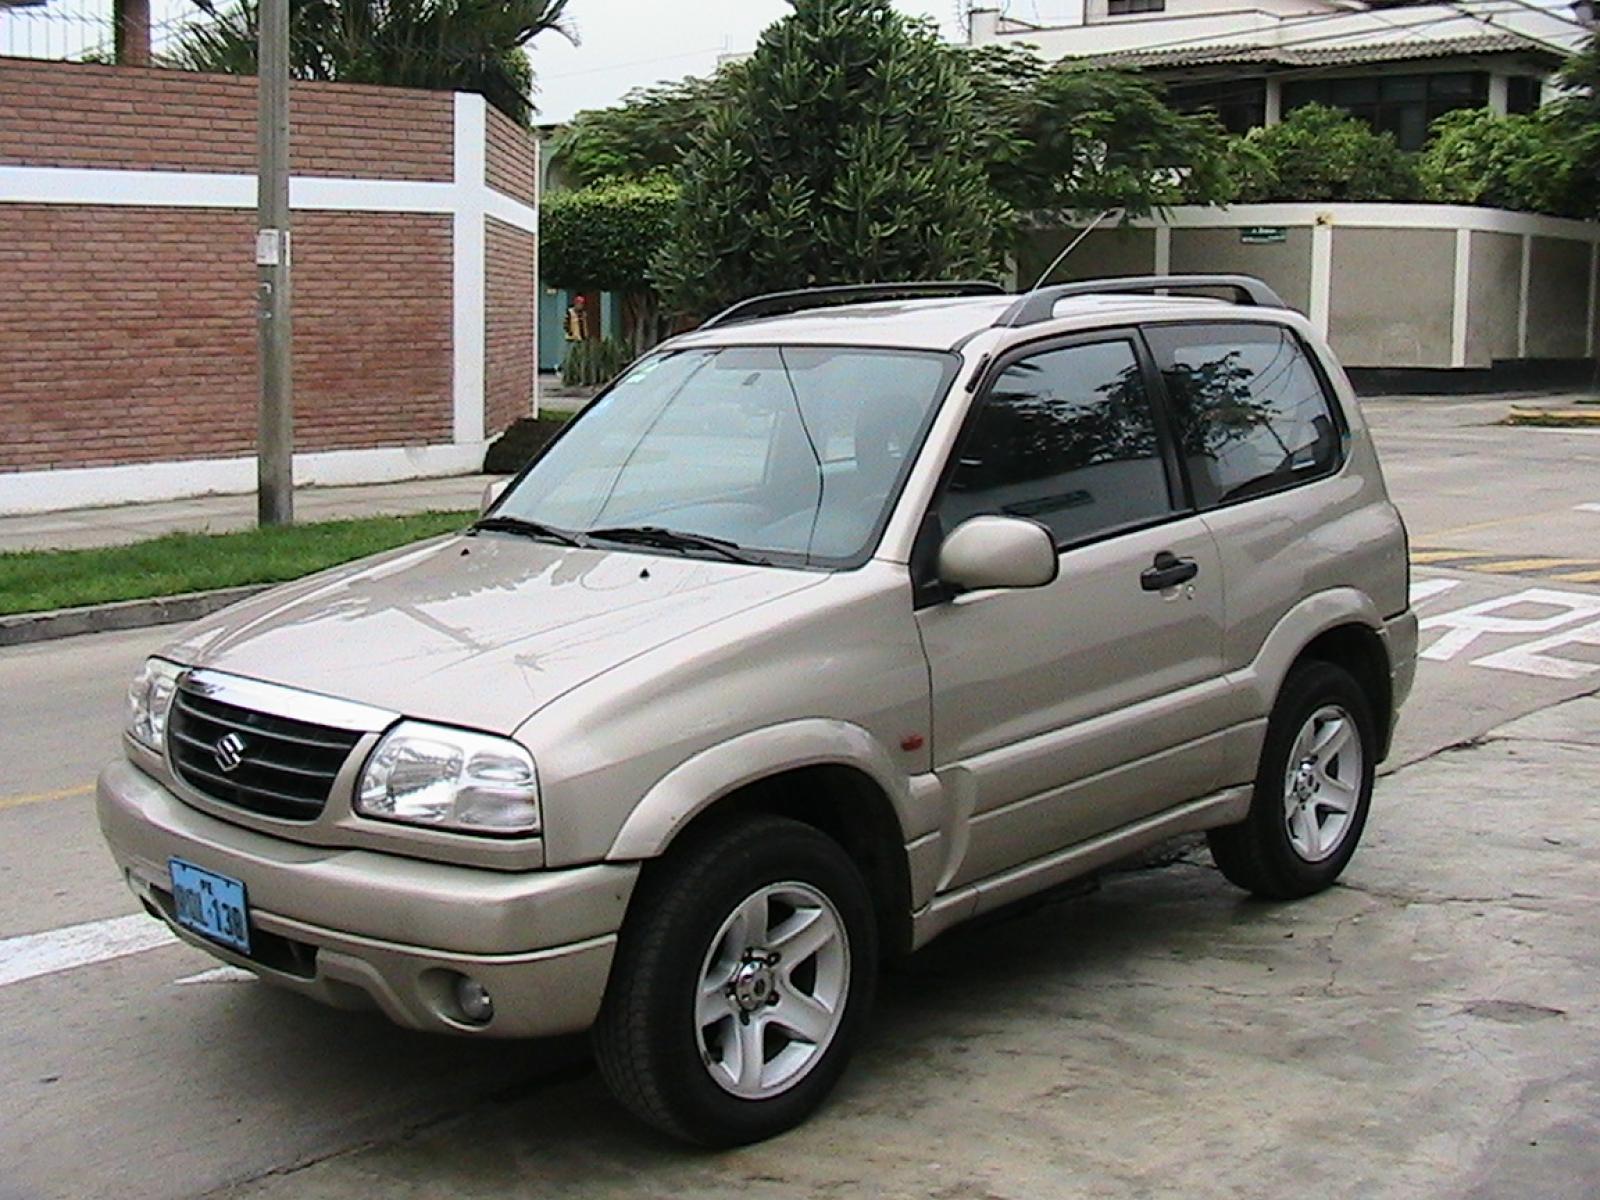 Suzuki grand vitara 2000 год